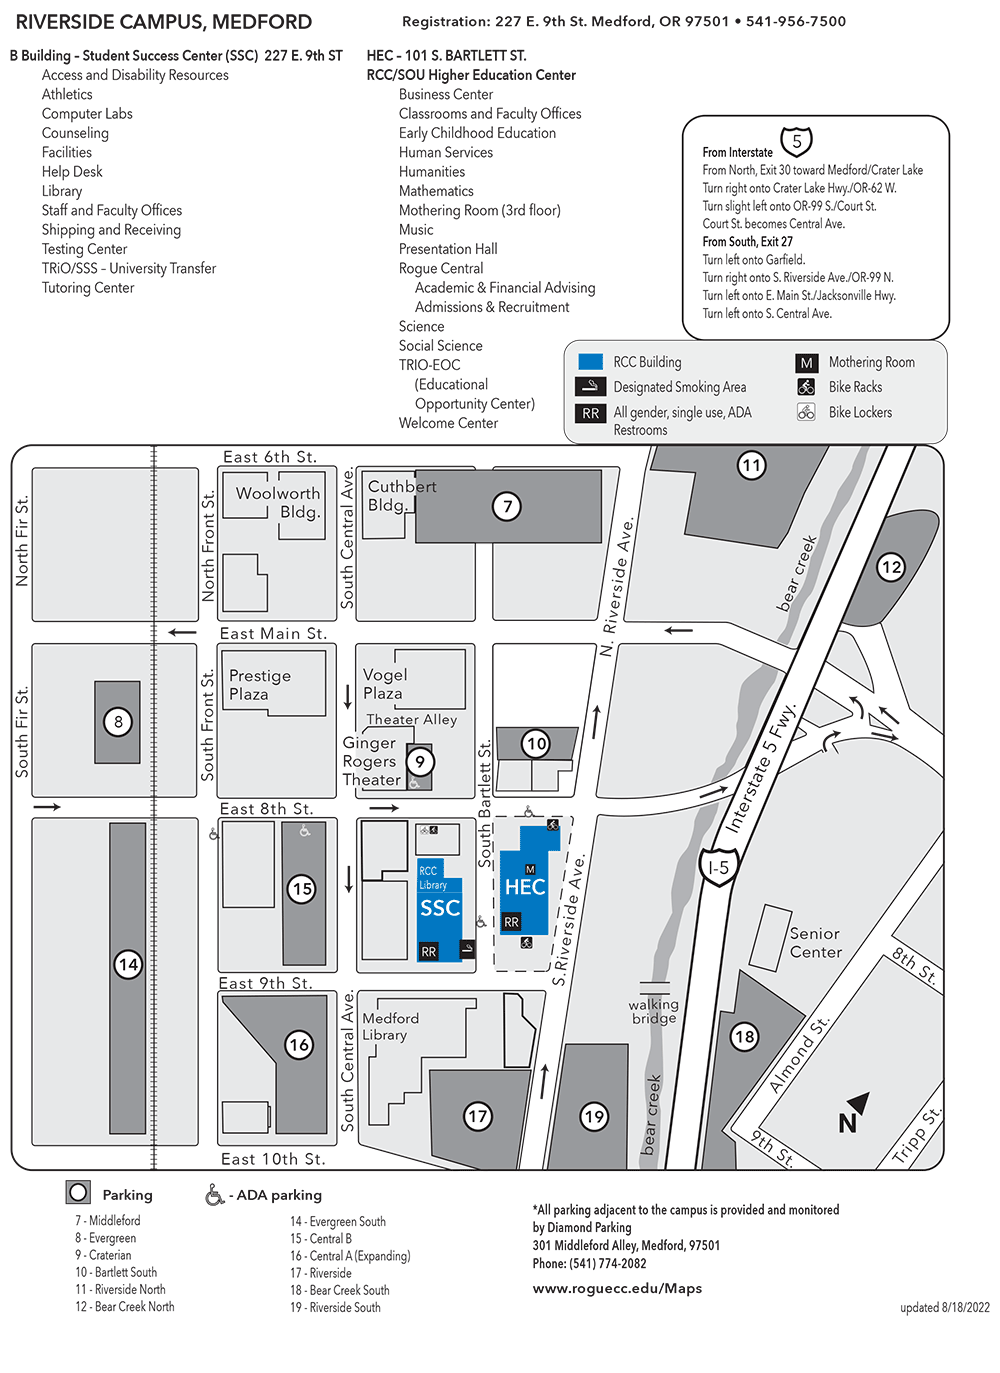 RCC Medford Riverside Campus Map